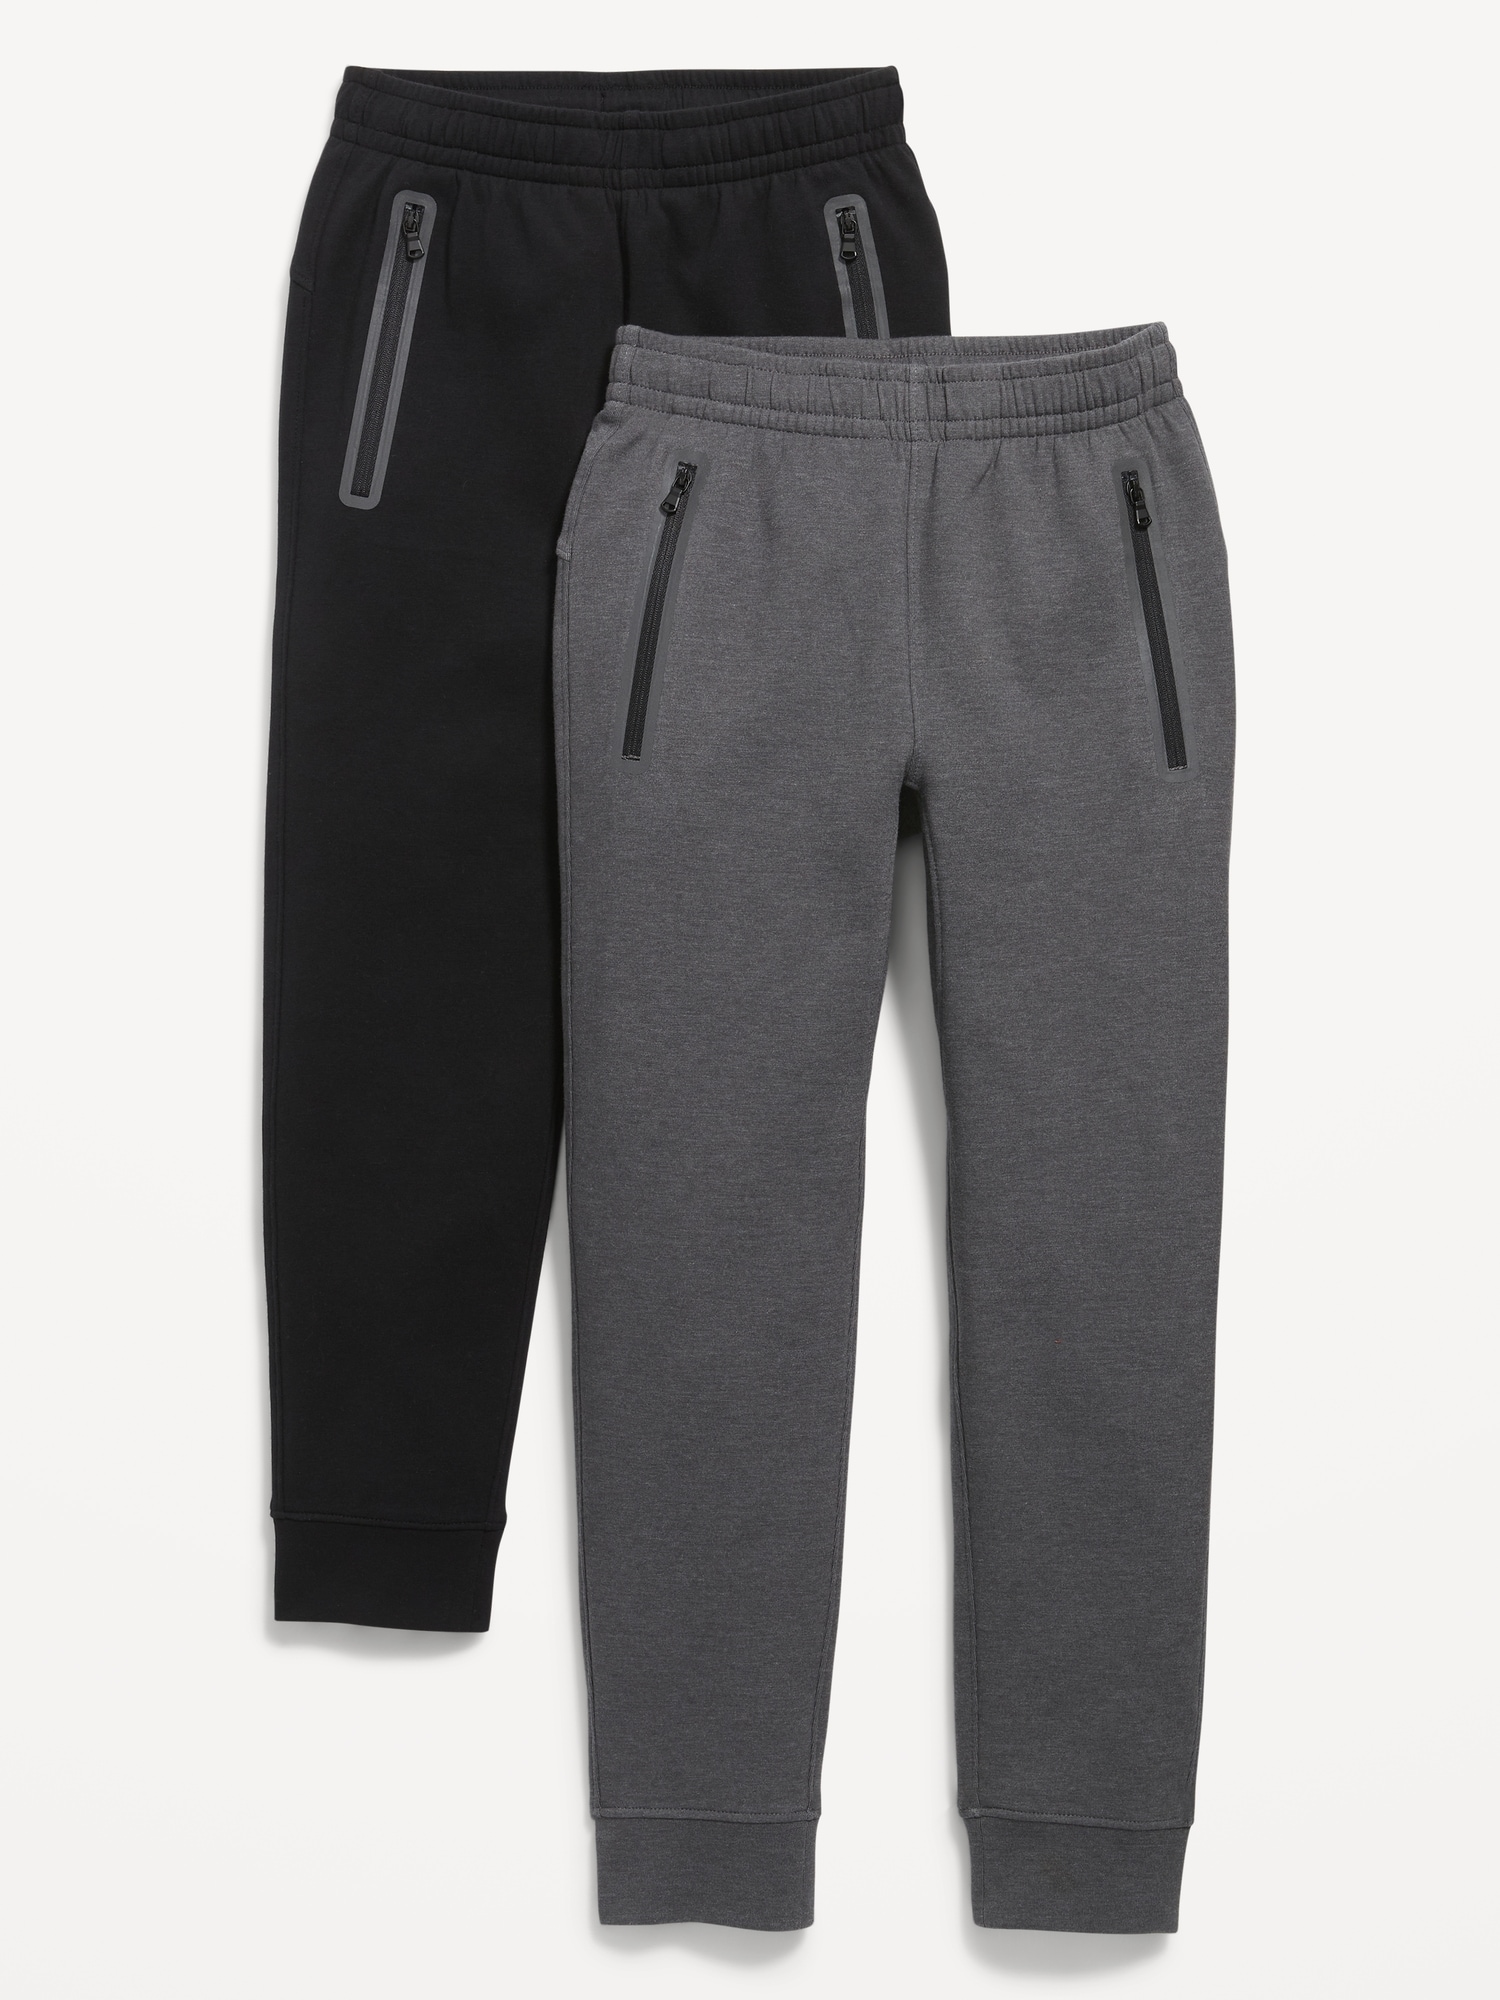 Old Navy, Pants, Nwt Black Dynamic Fleece Jogger Sweatpants For Men  Multiple Sizes